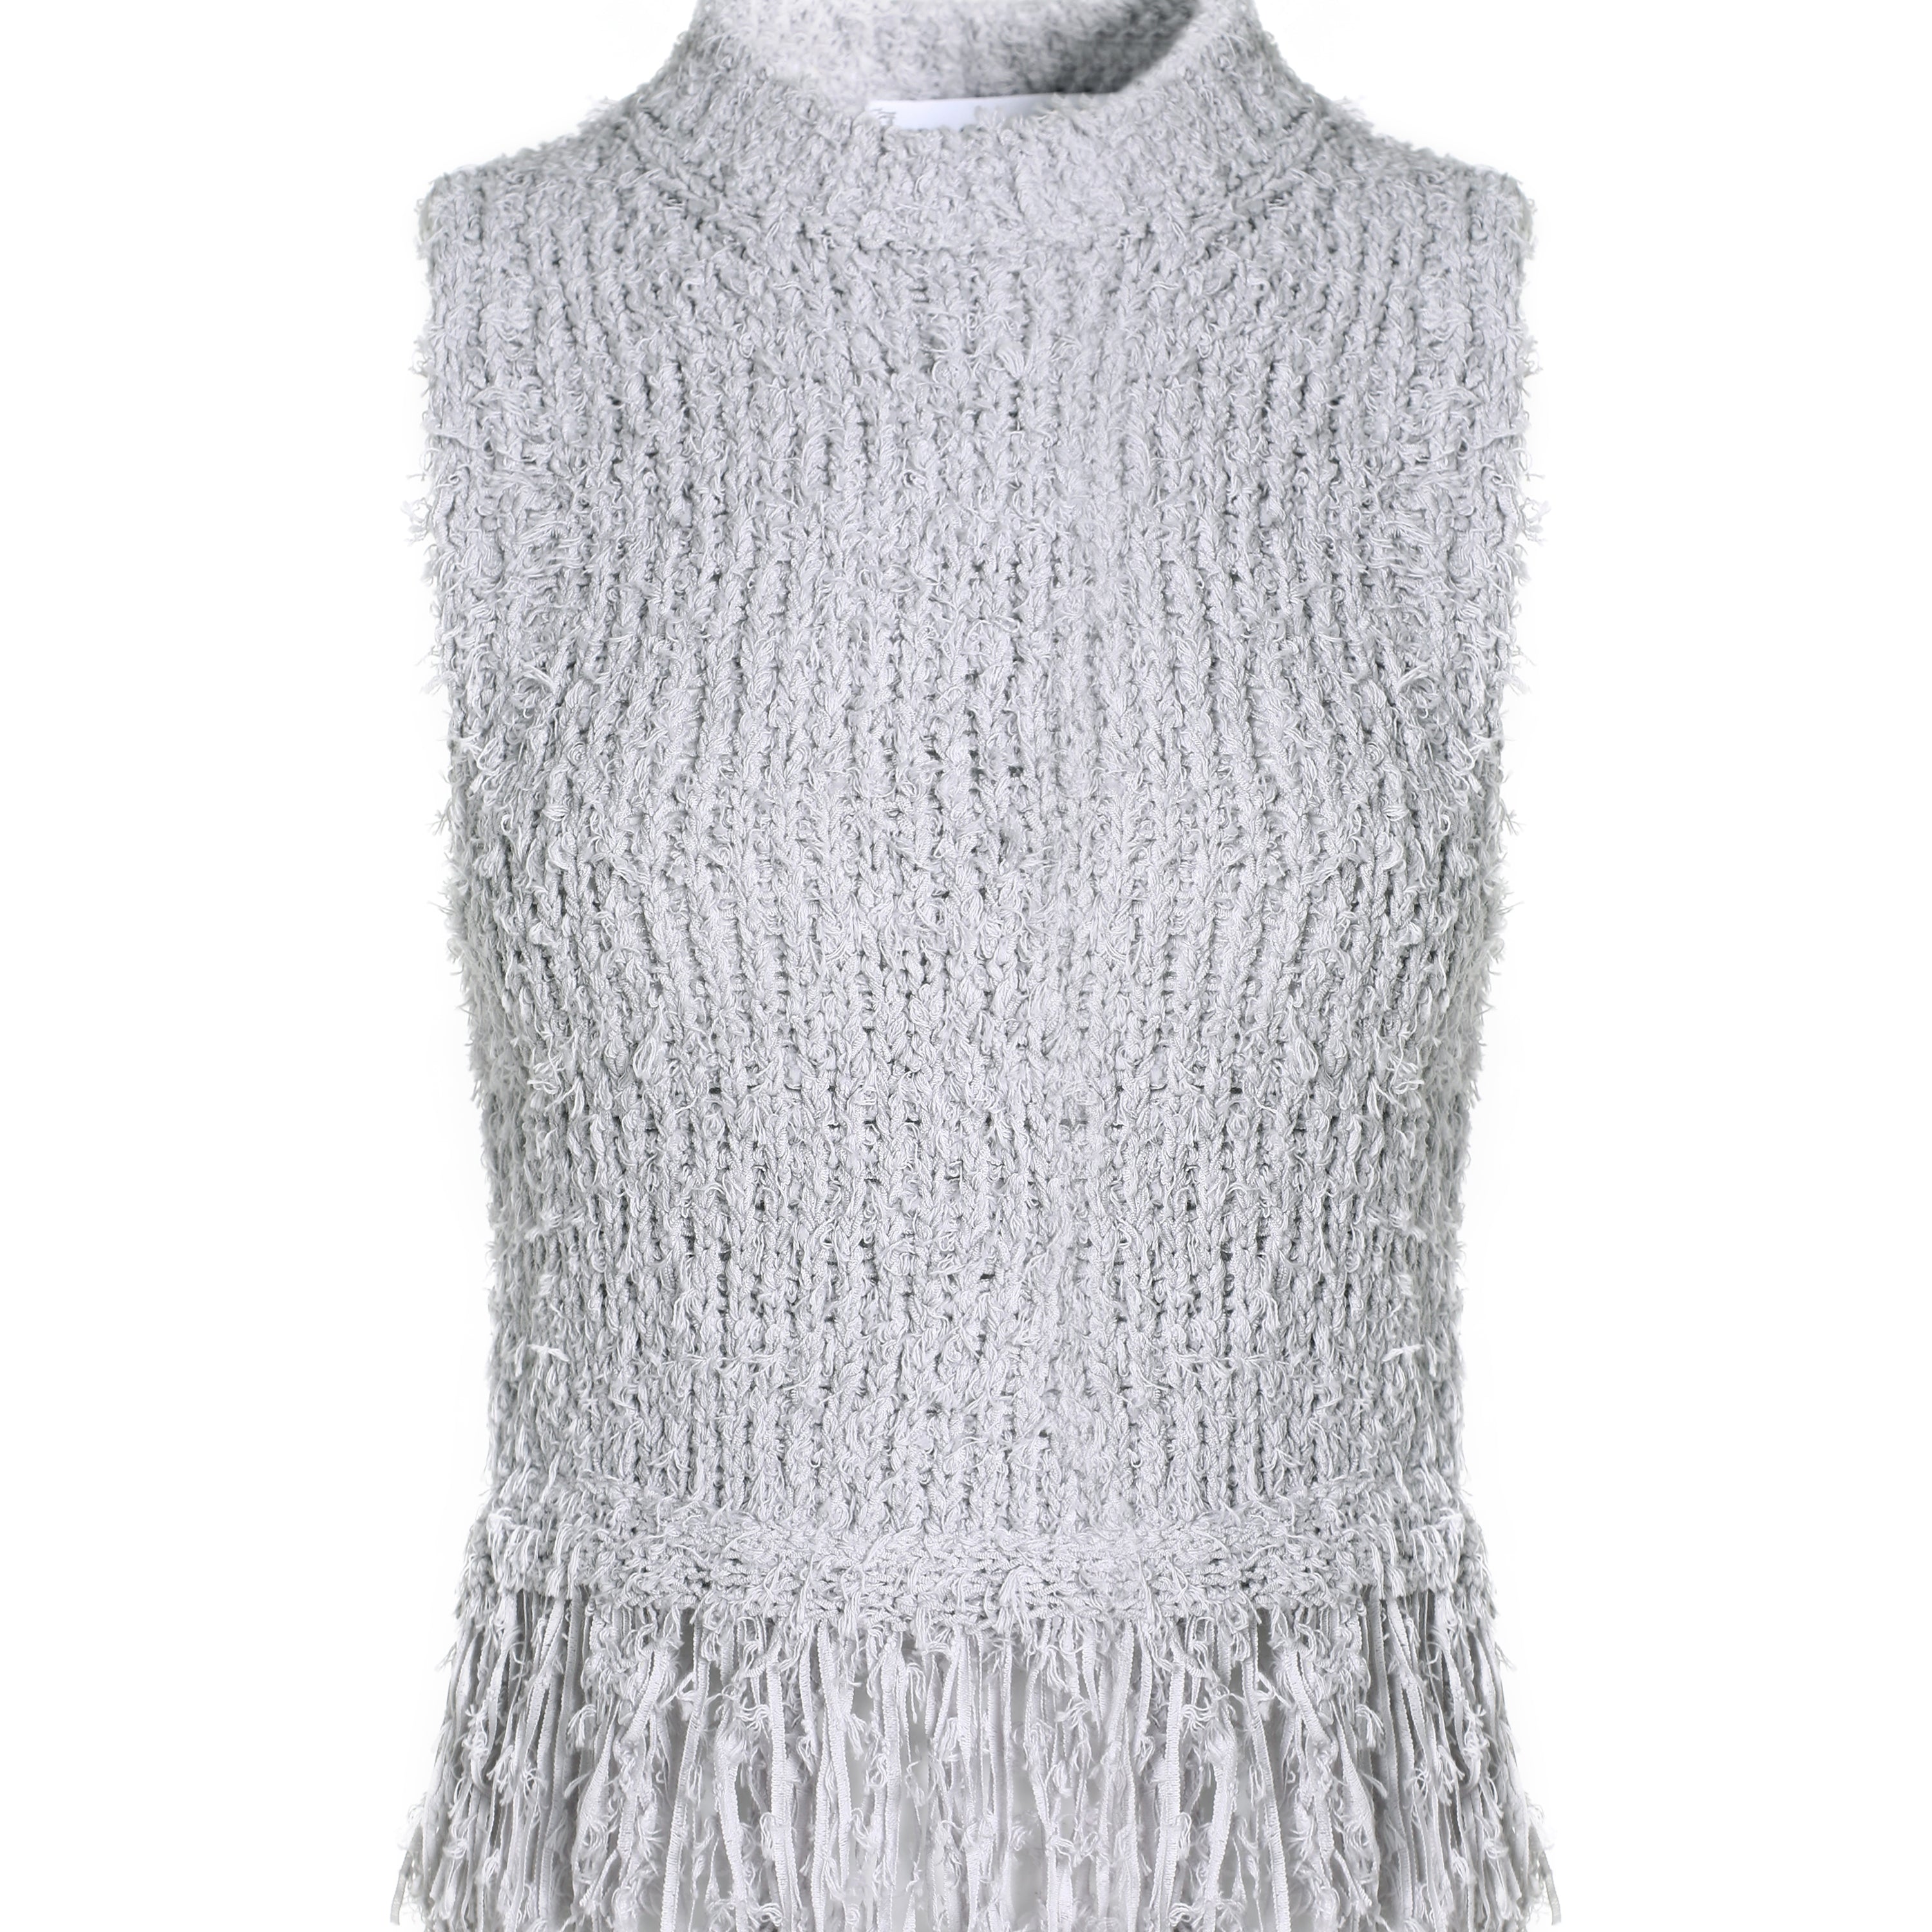 Flynn cotton knit gray top